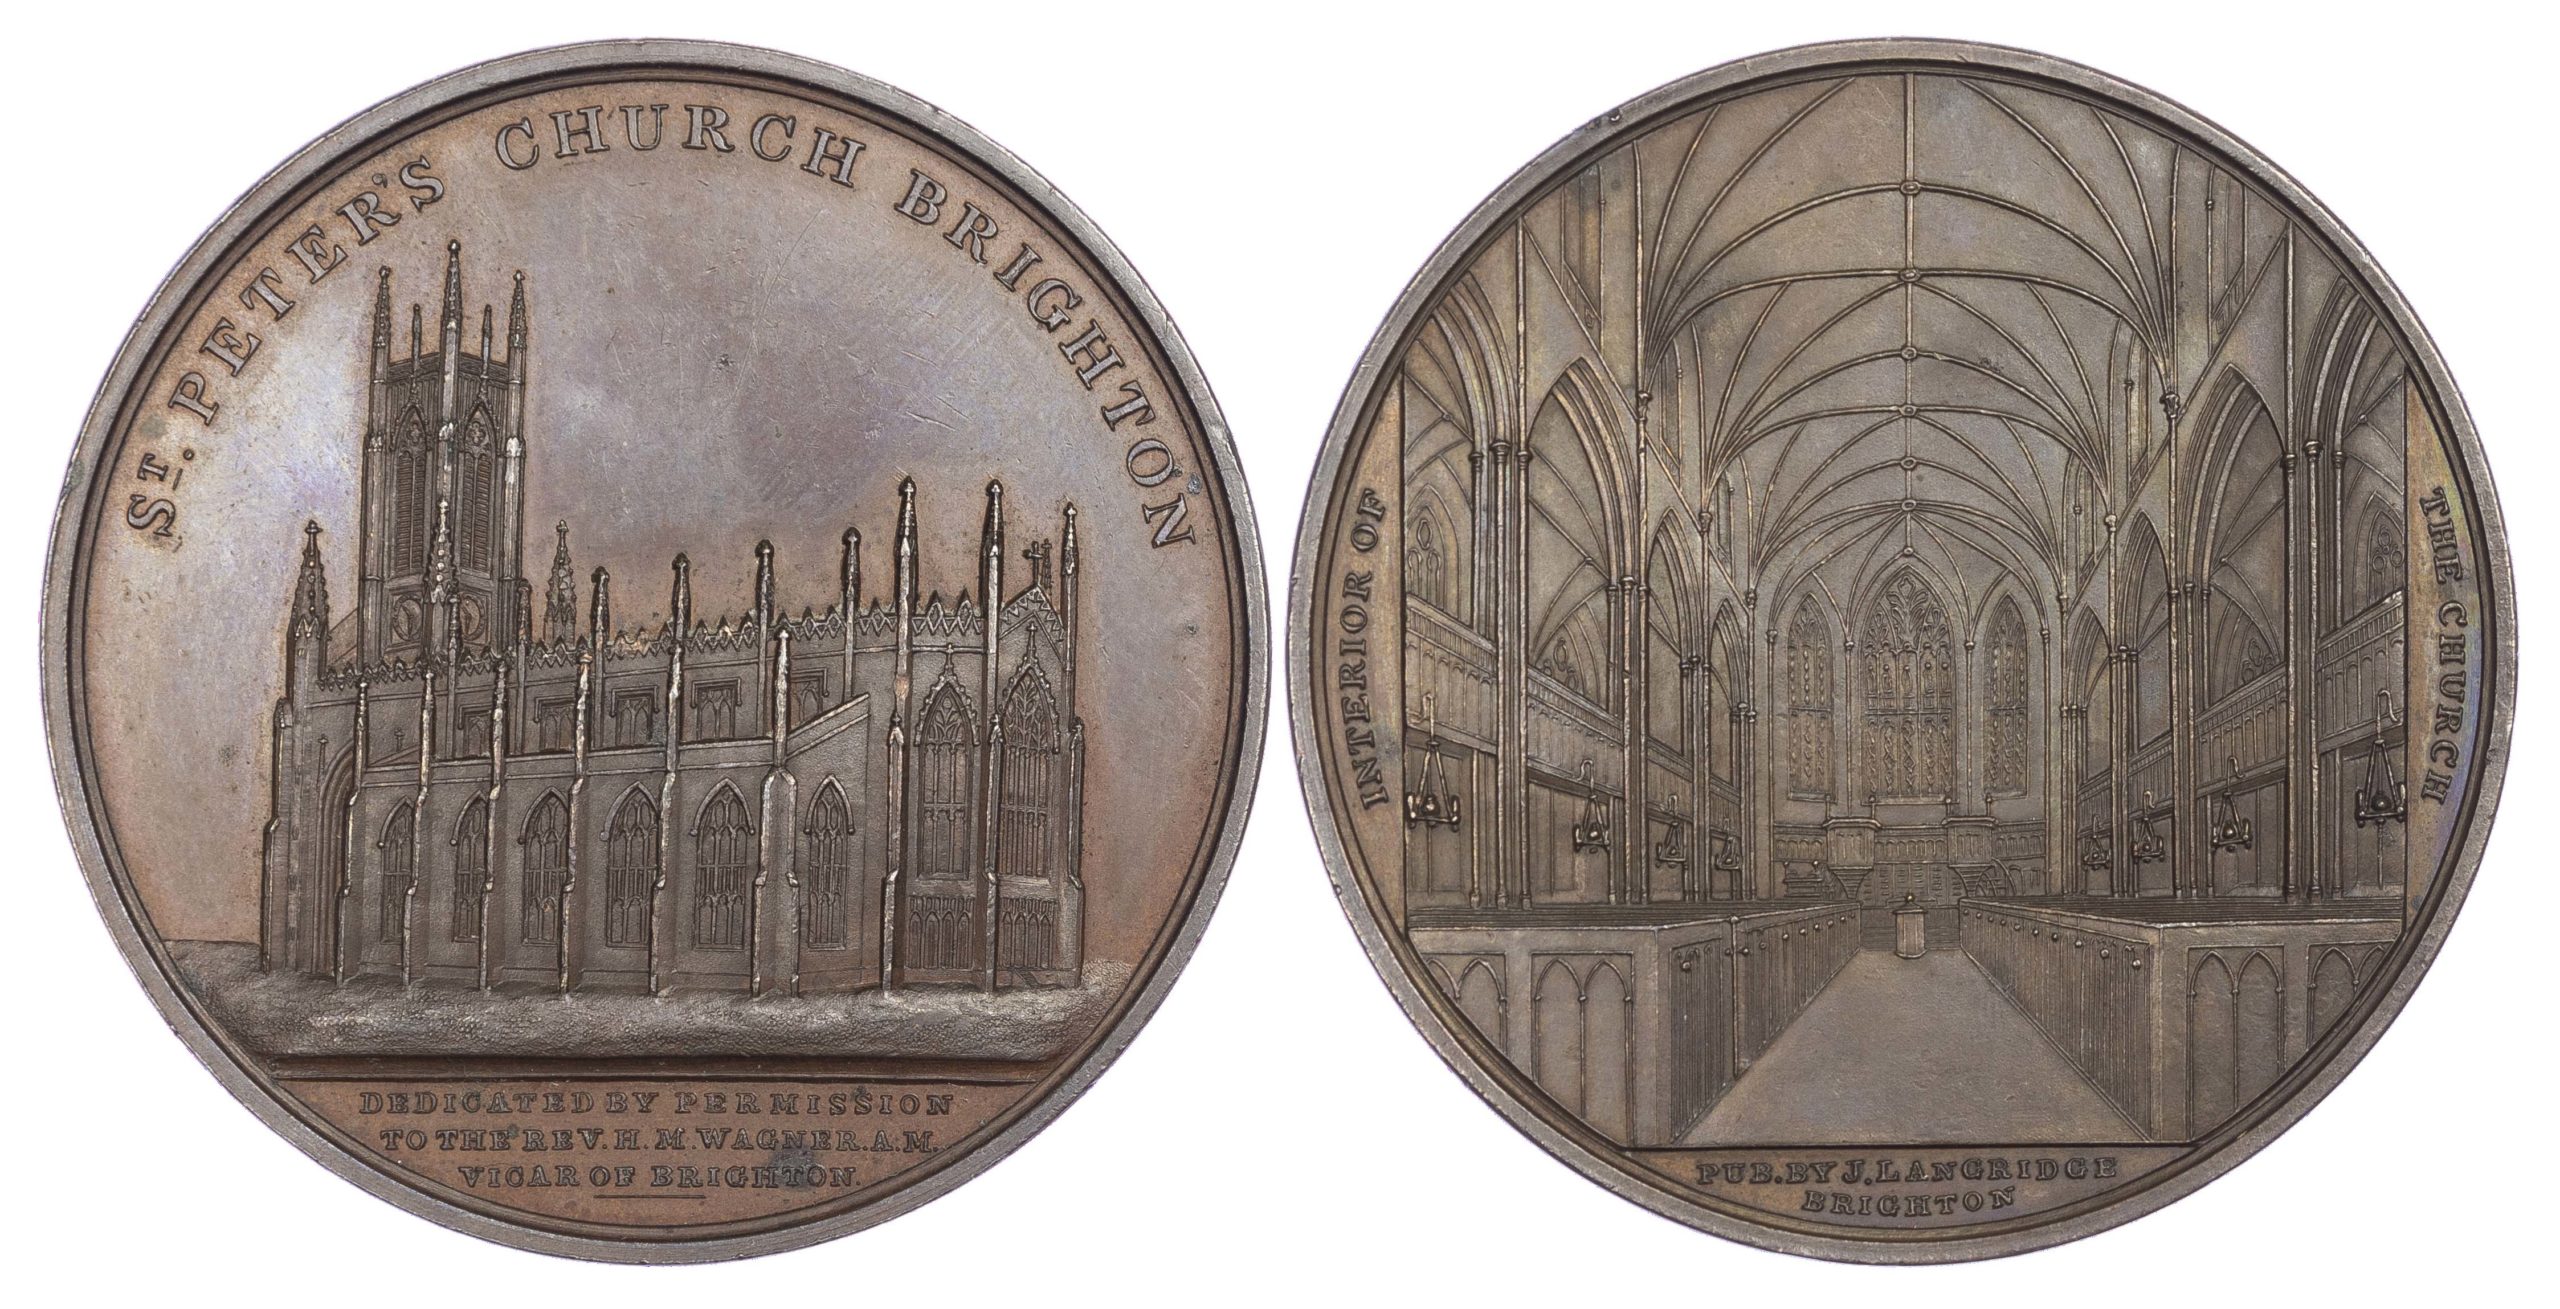 George IV, Brighton, Dedication of St. Peter’s Church, AE medal